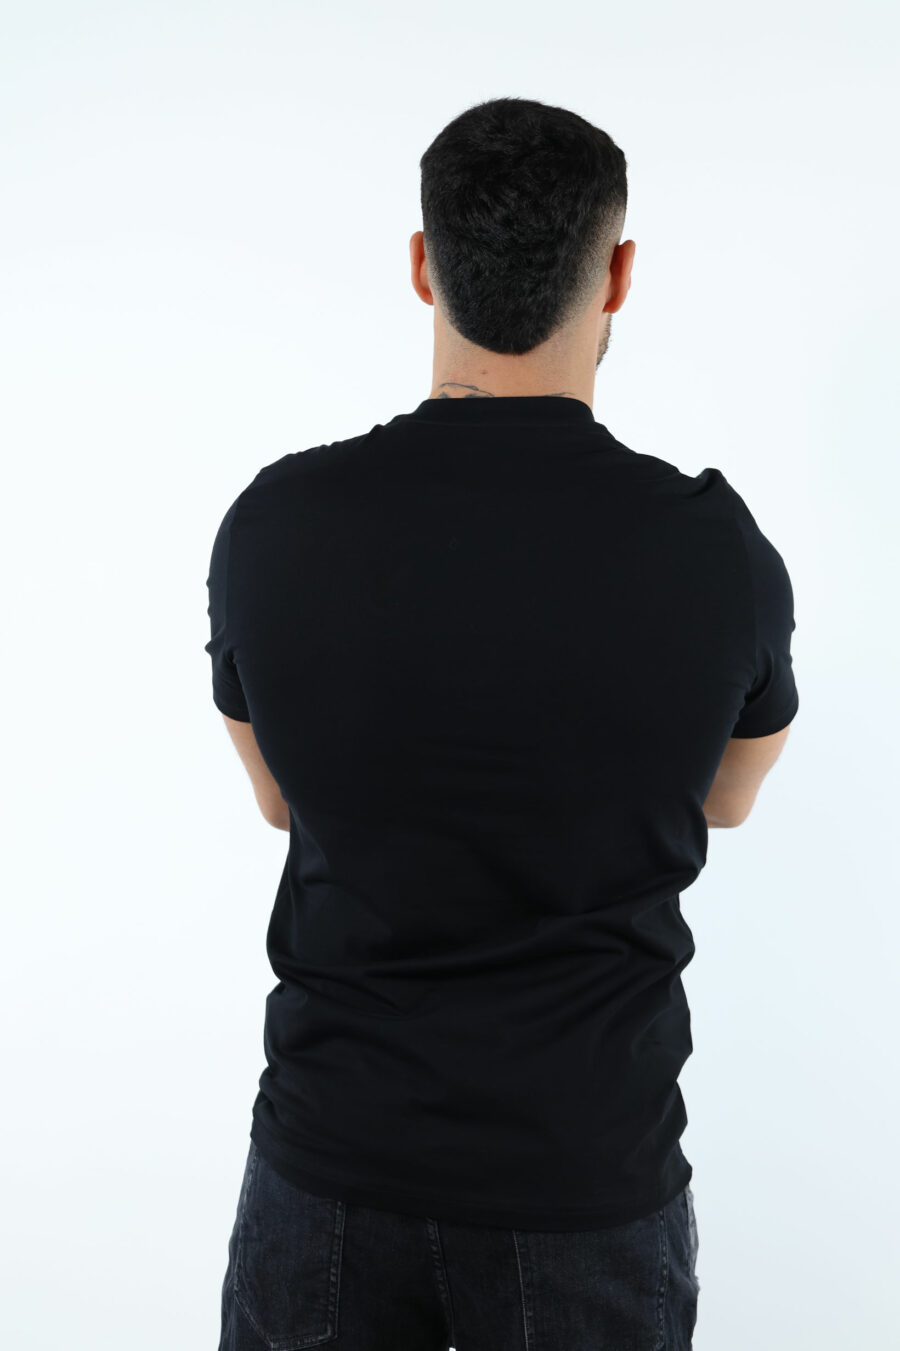 Camiseta negra con minilogo "teddy" bordado - 107178